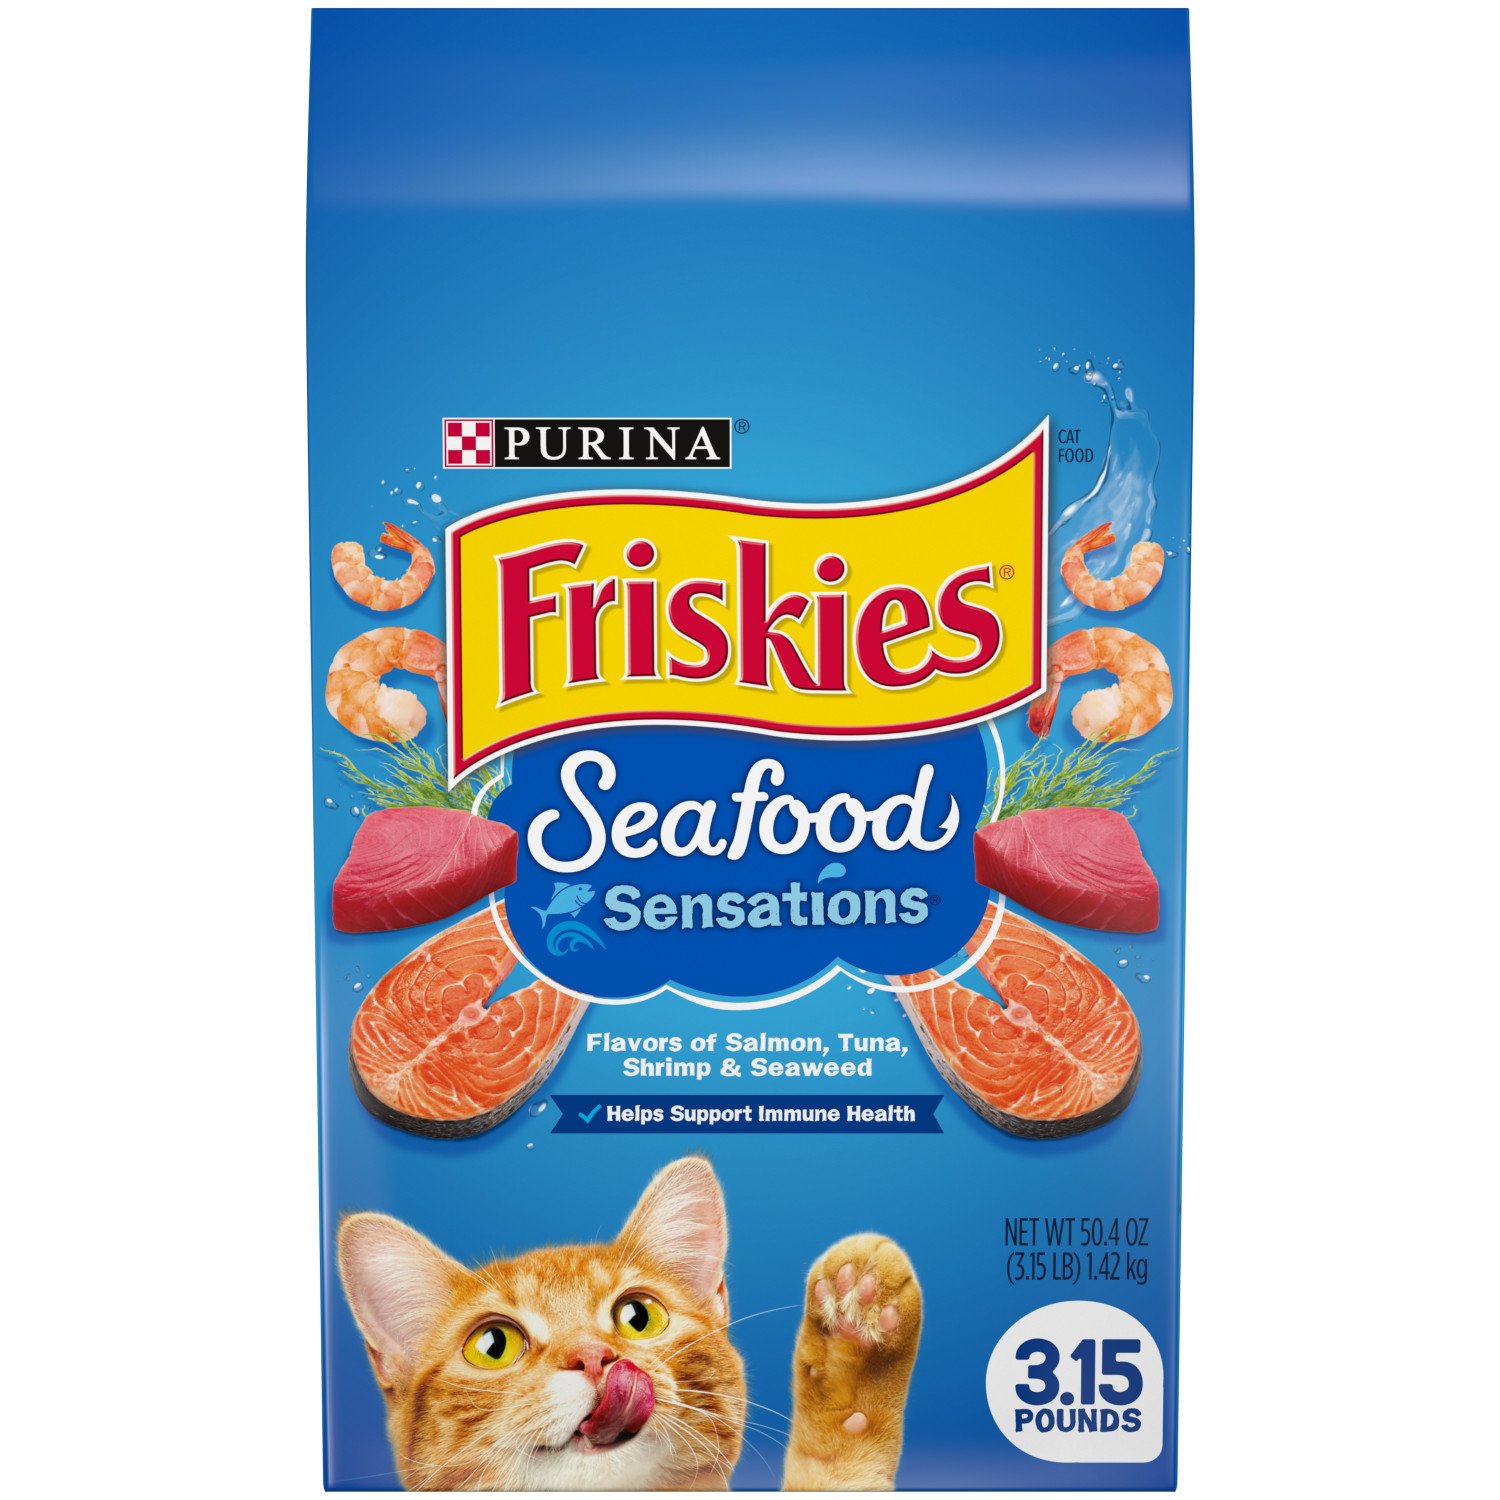 Purina Friskies Seafood Sensations Cat Food Shop Cats at HEB